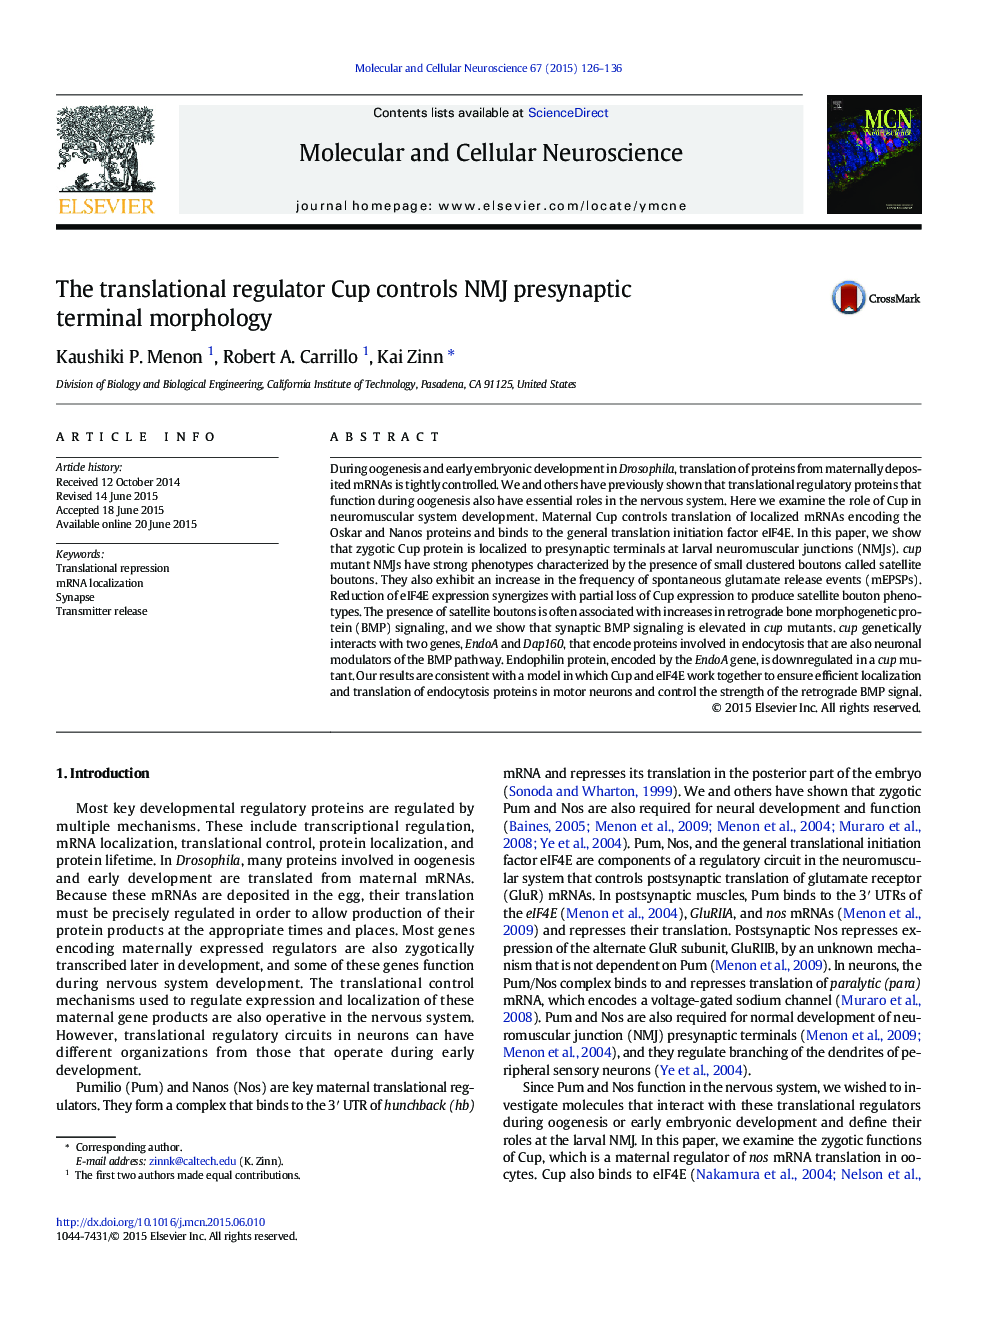 The translational regulator Cup controls NMJ presynaptic terminal morphology